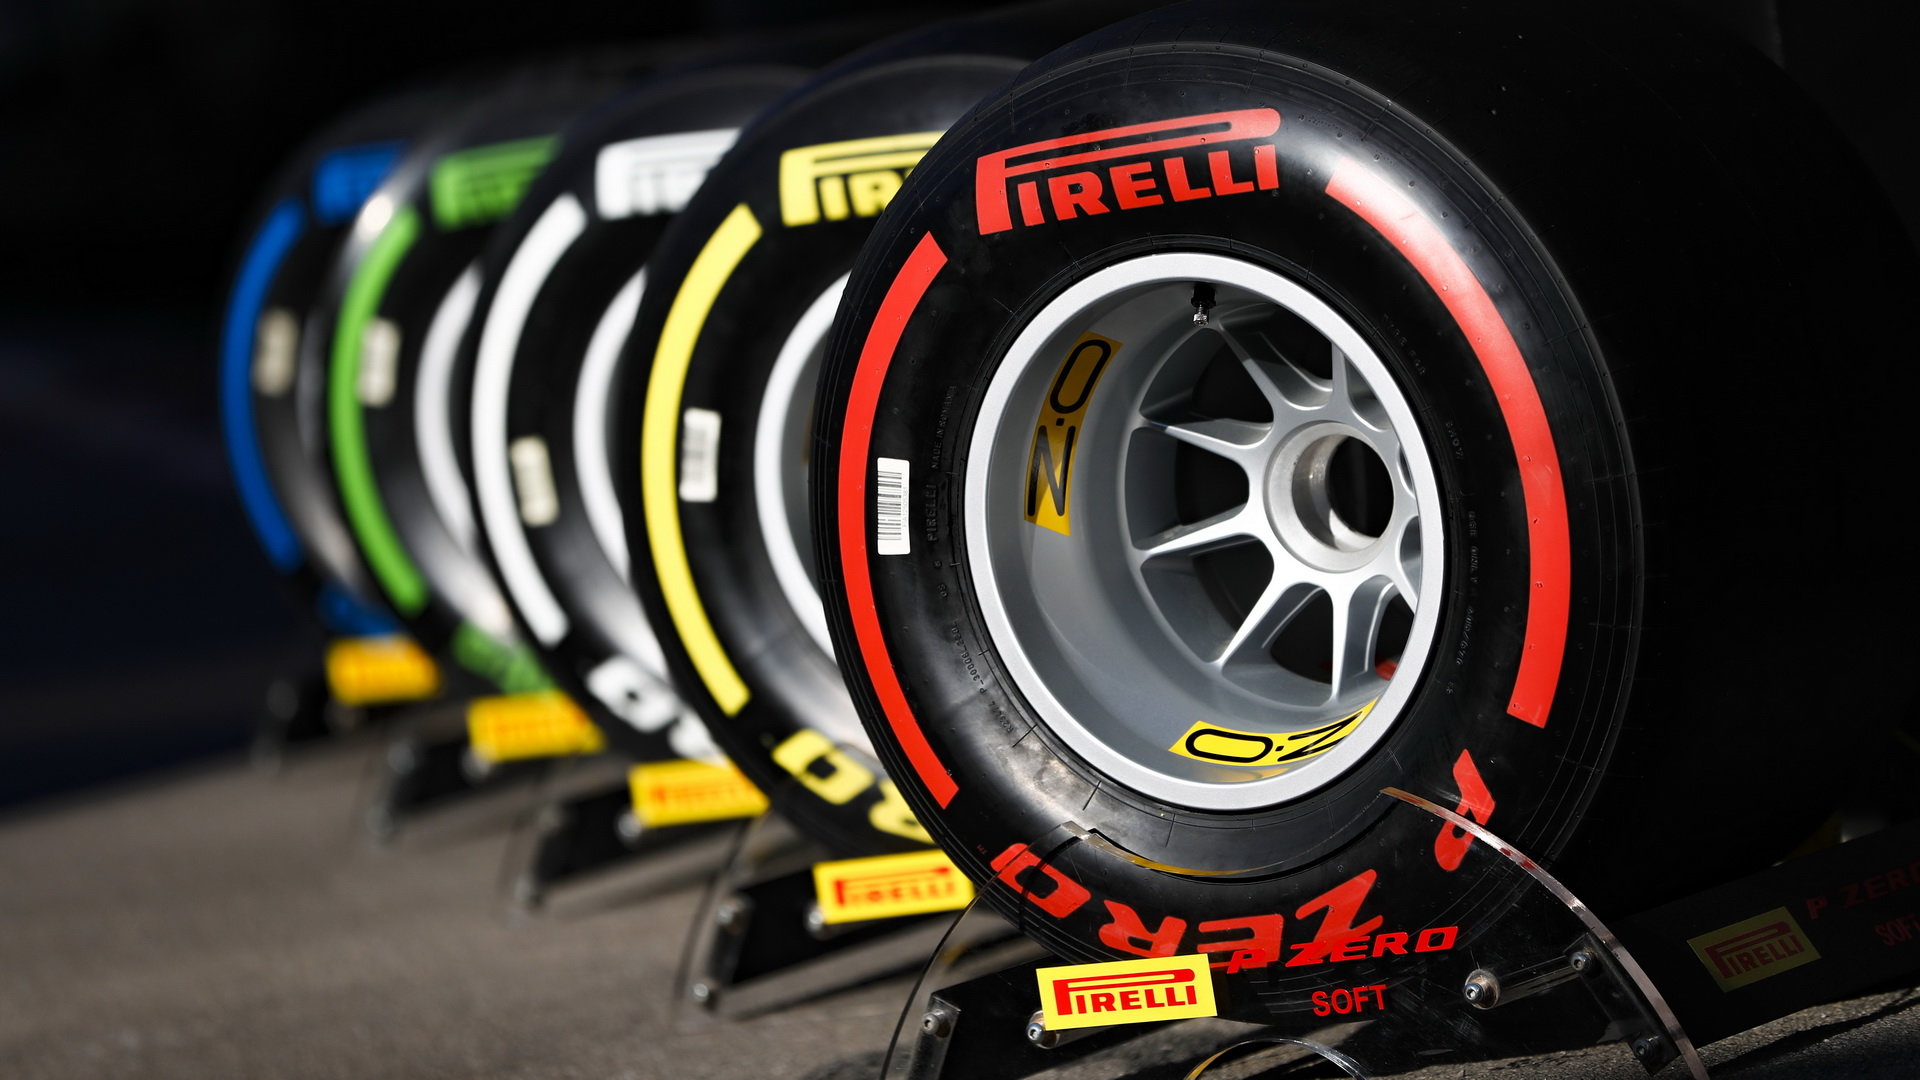 Pneumatiky Pirelli pro sezónu 2019